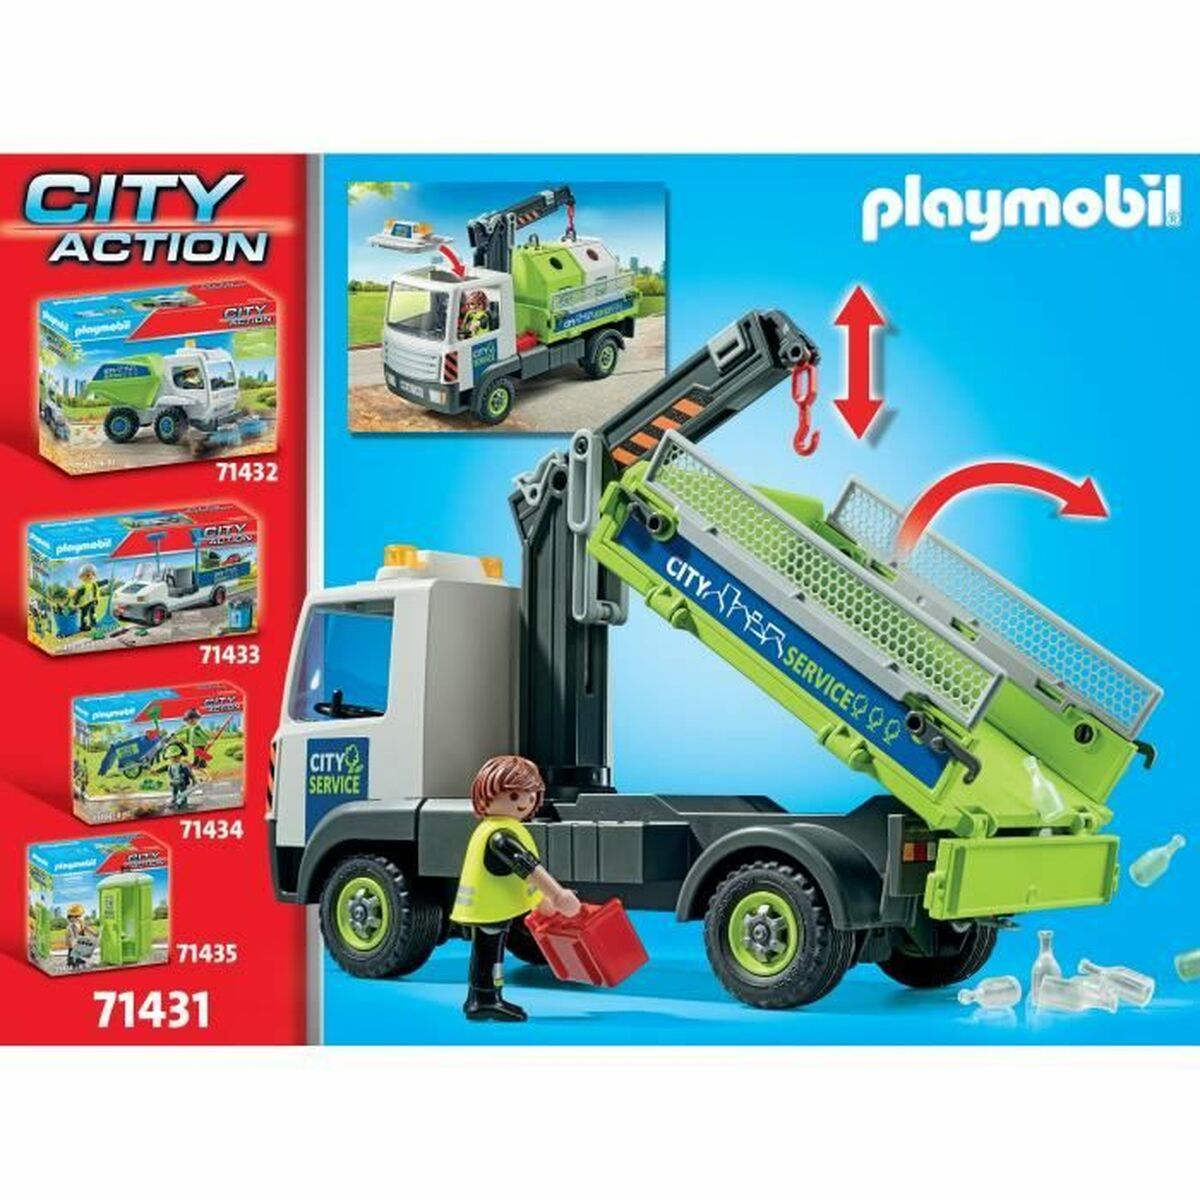 Playset Playmobil 71431 City Action - Playmobil - Jardin D'Eyden - jardindeyden.fr